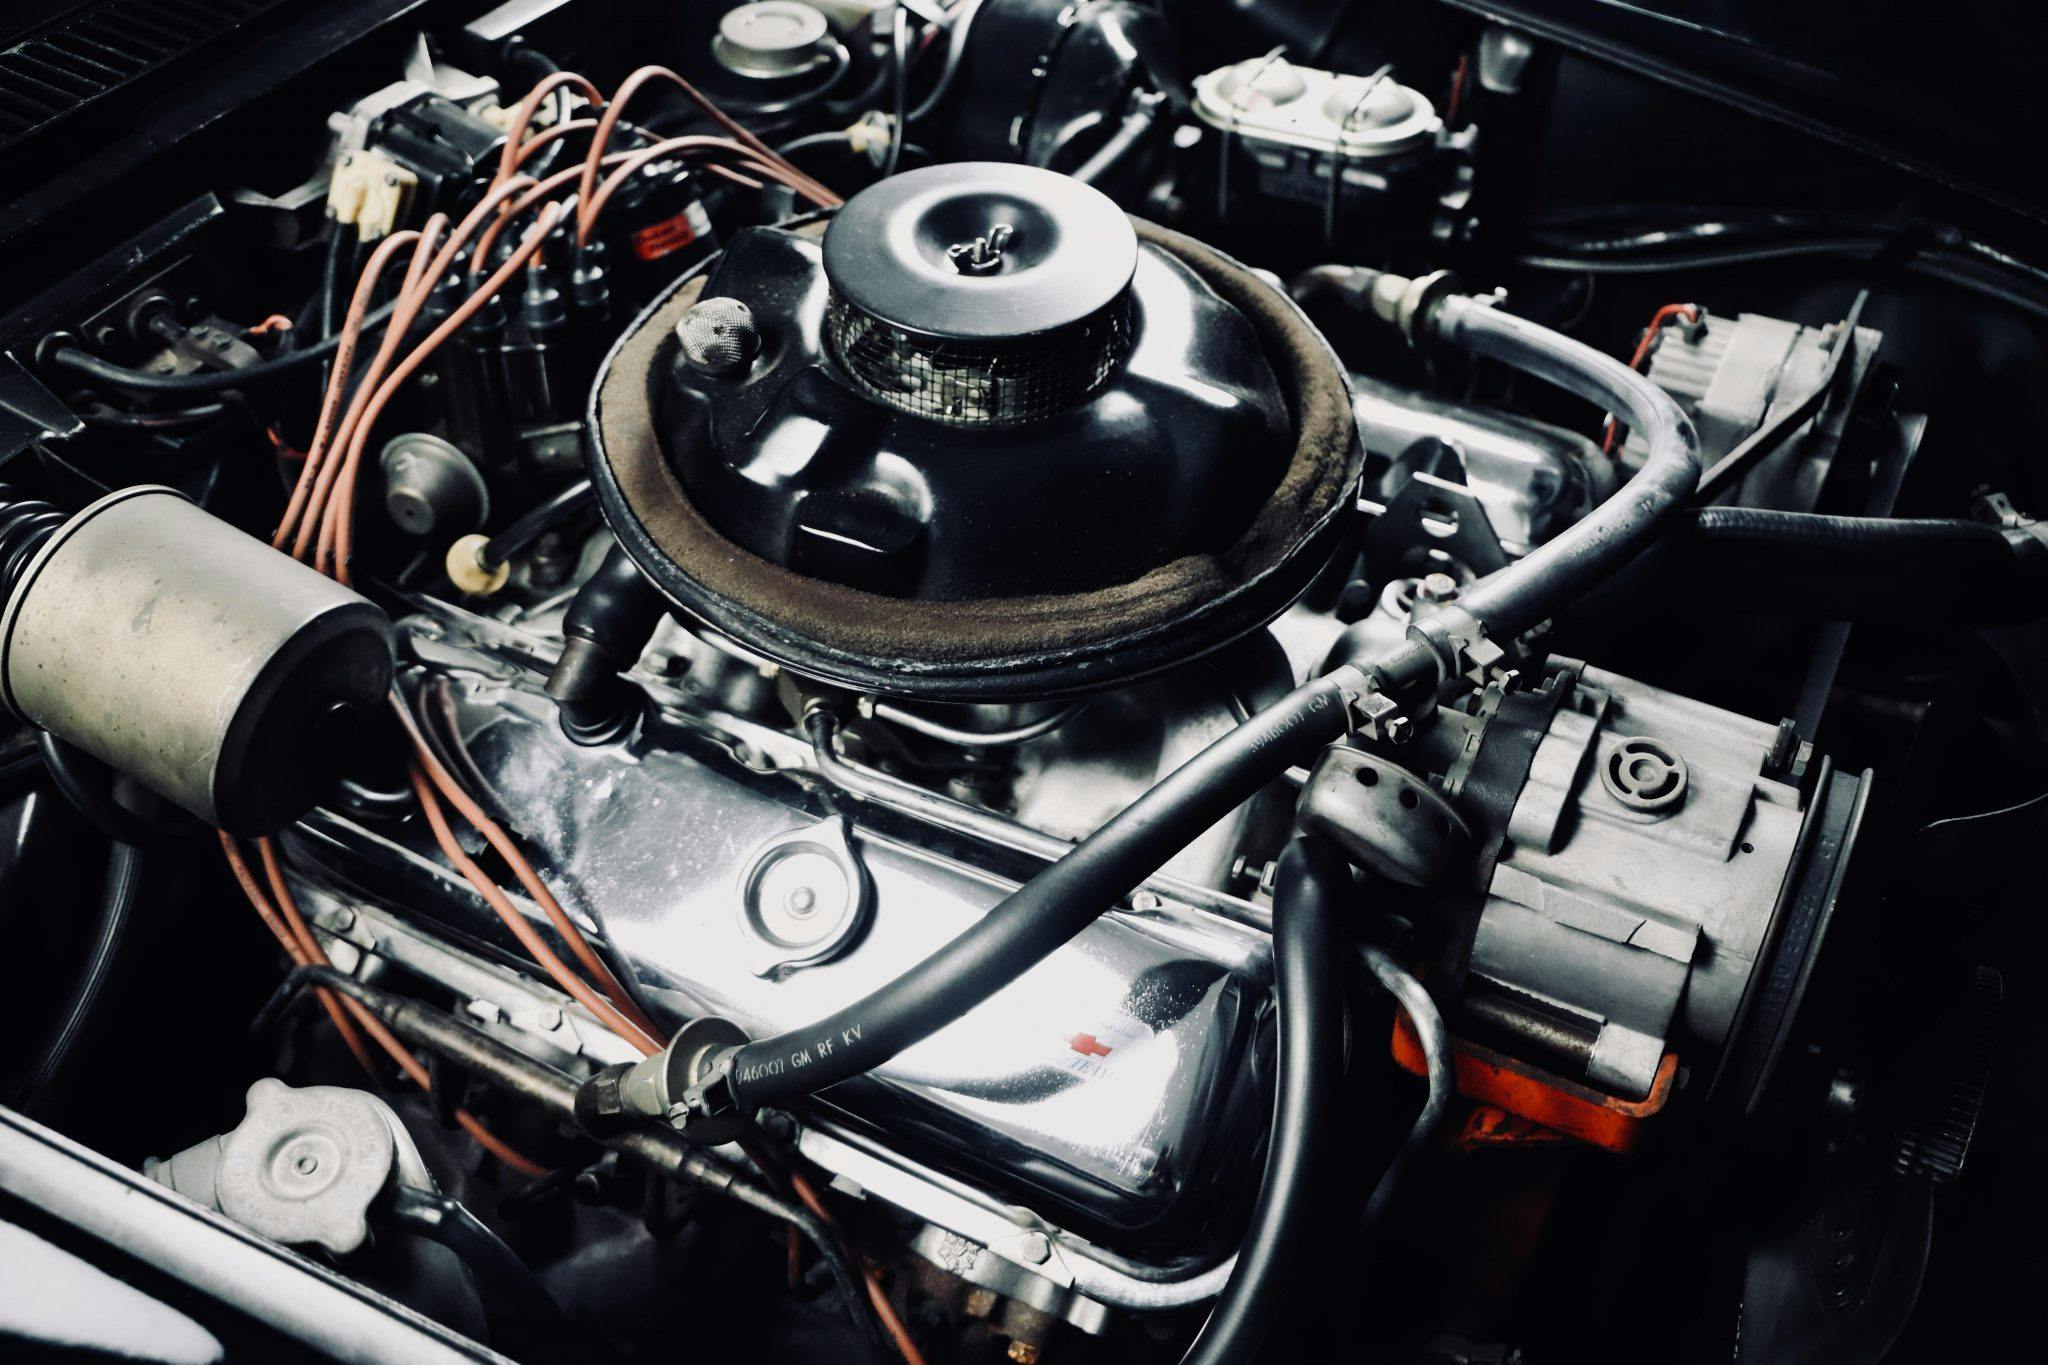 1969 Chevrolet Corvette L88 engine